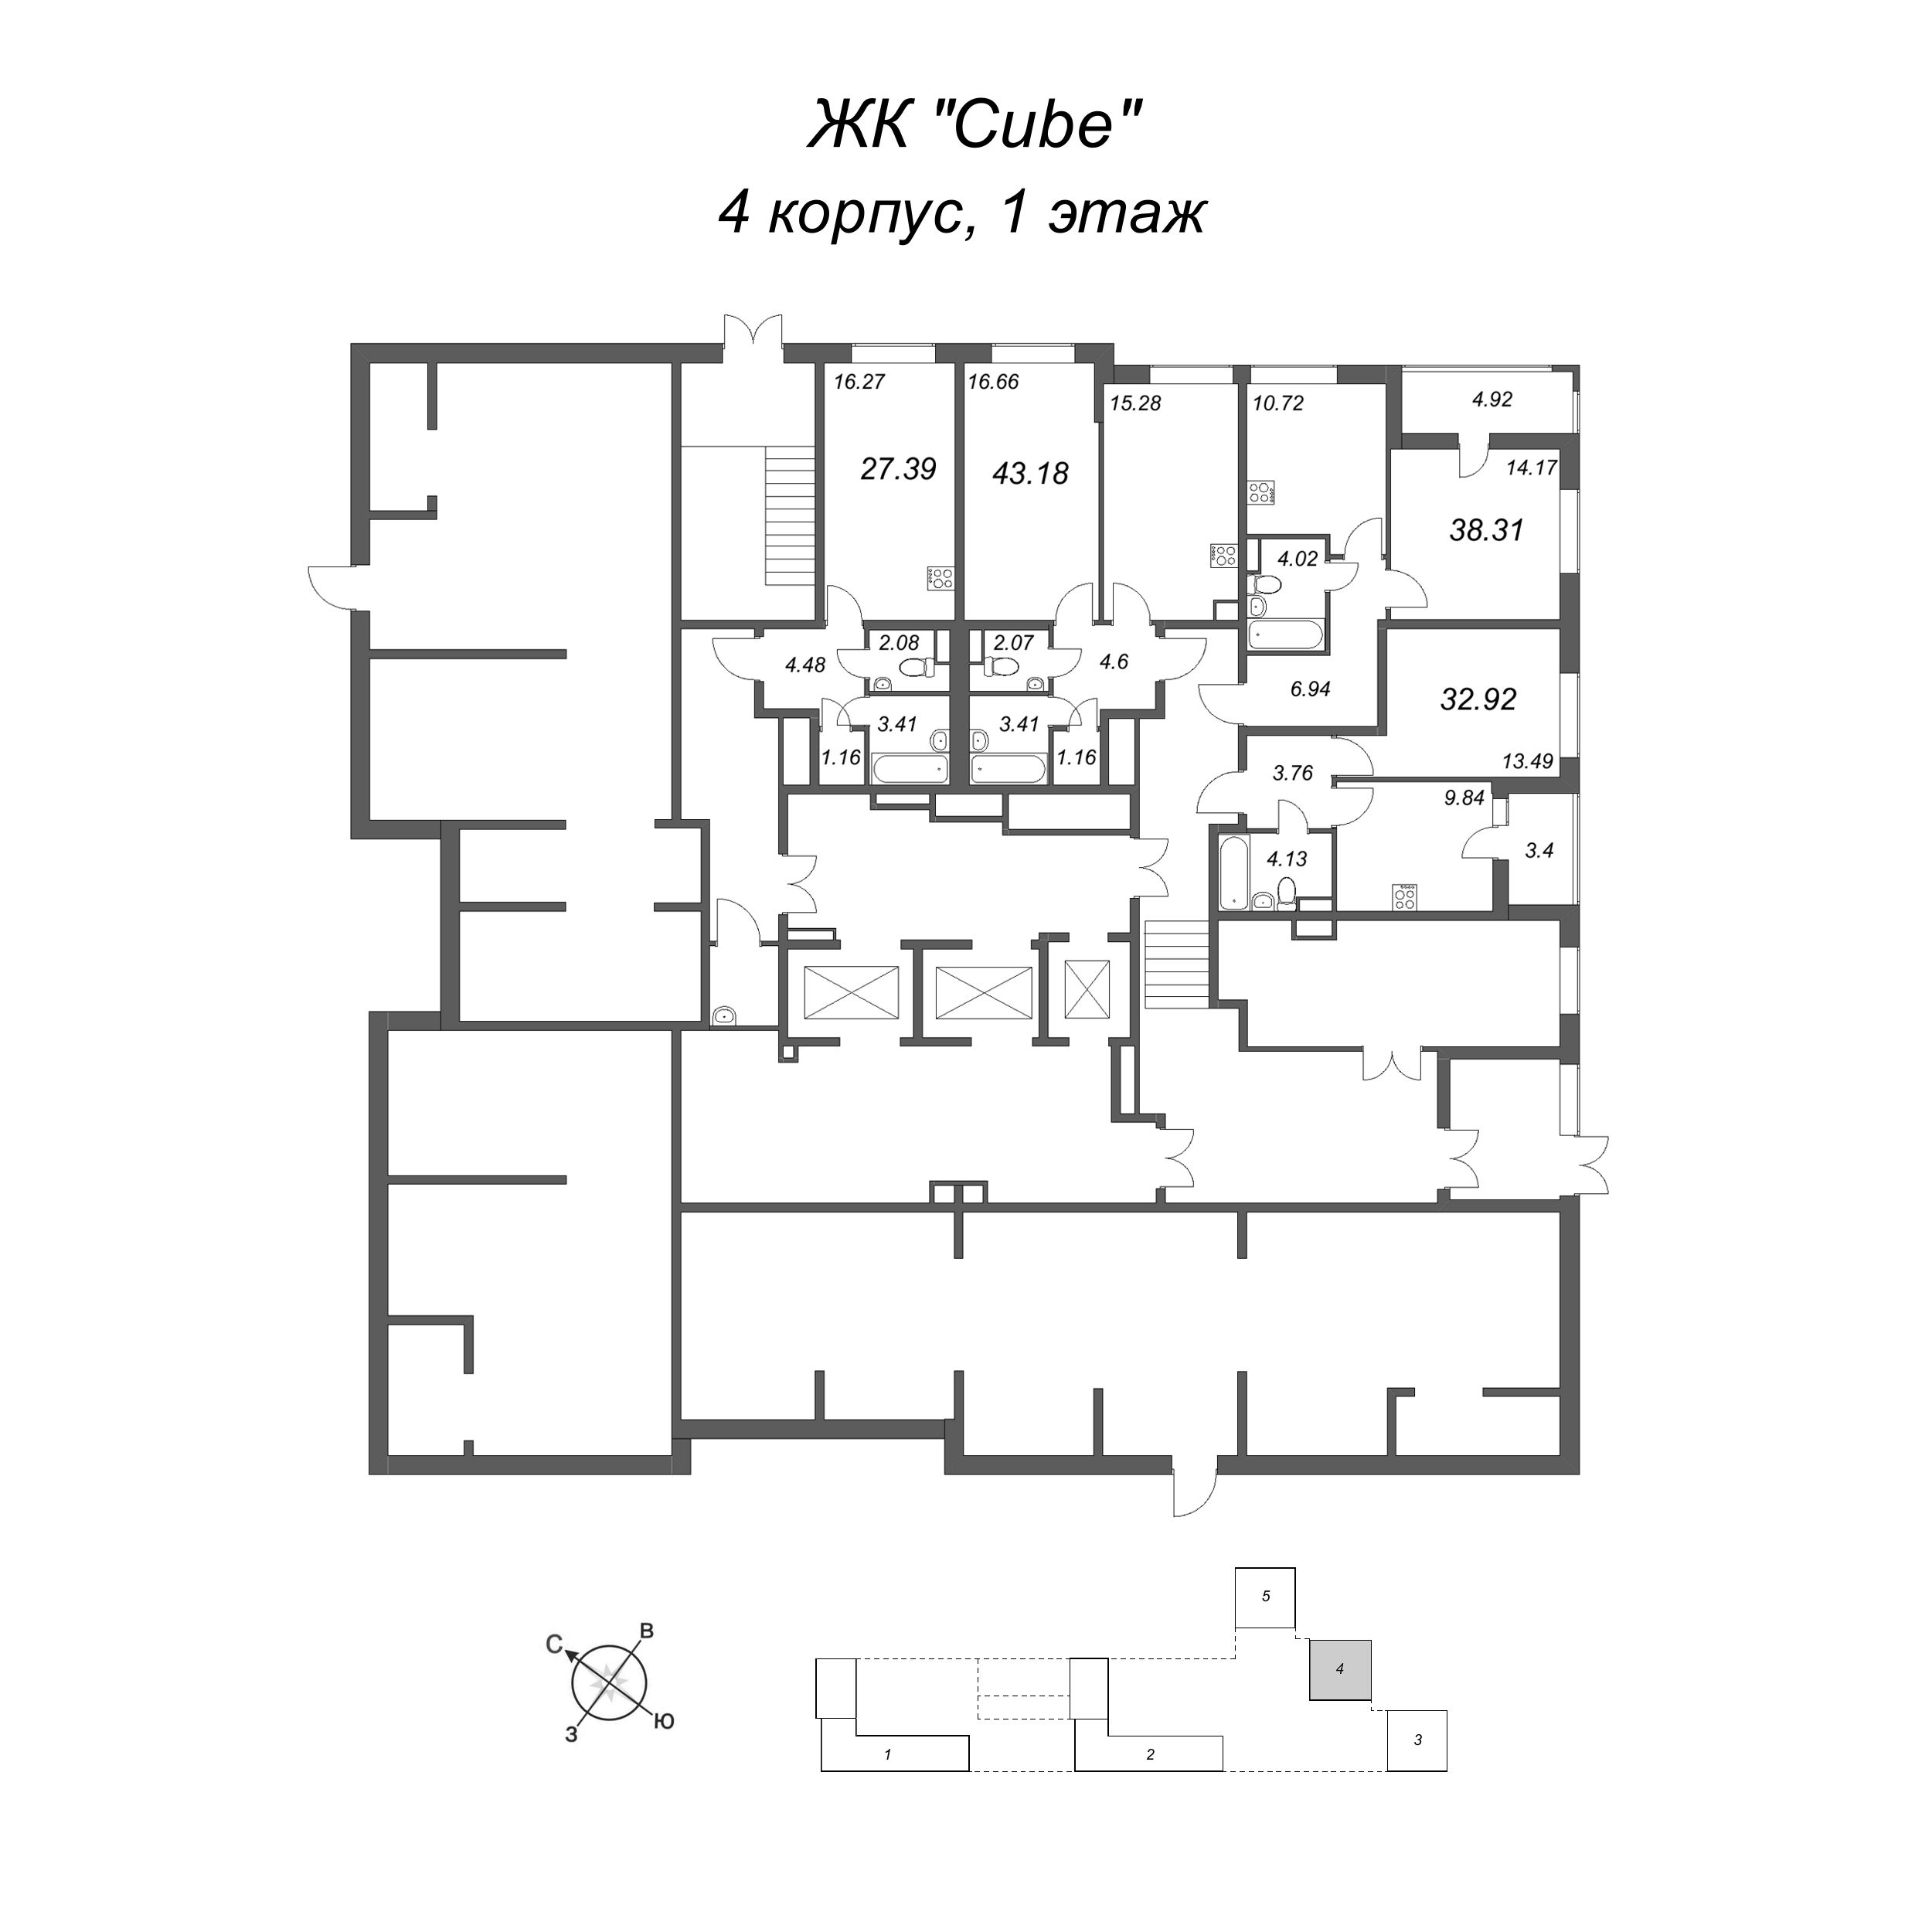 2-комнатная (Евро) квартира, 43.18 м² в ЖК "Cube" - планировка этажа